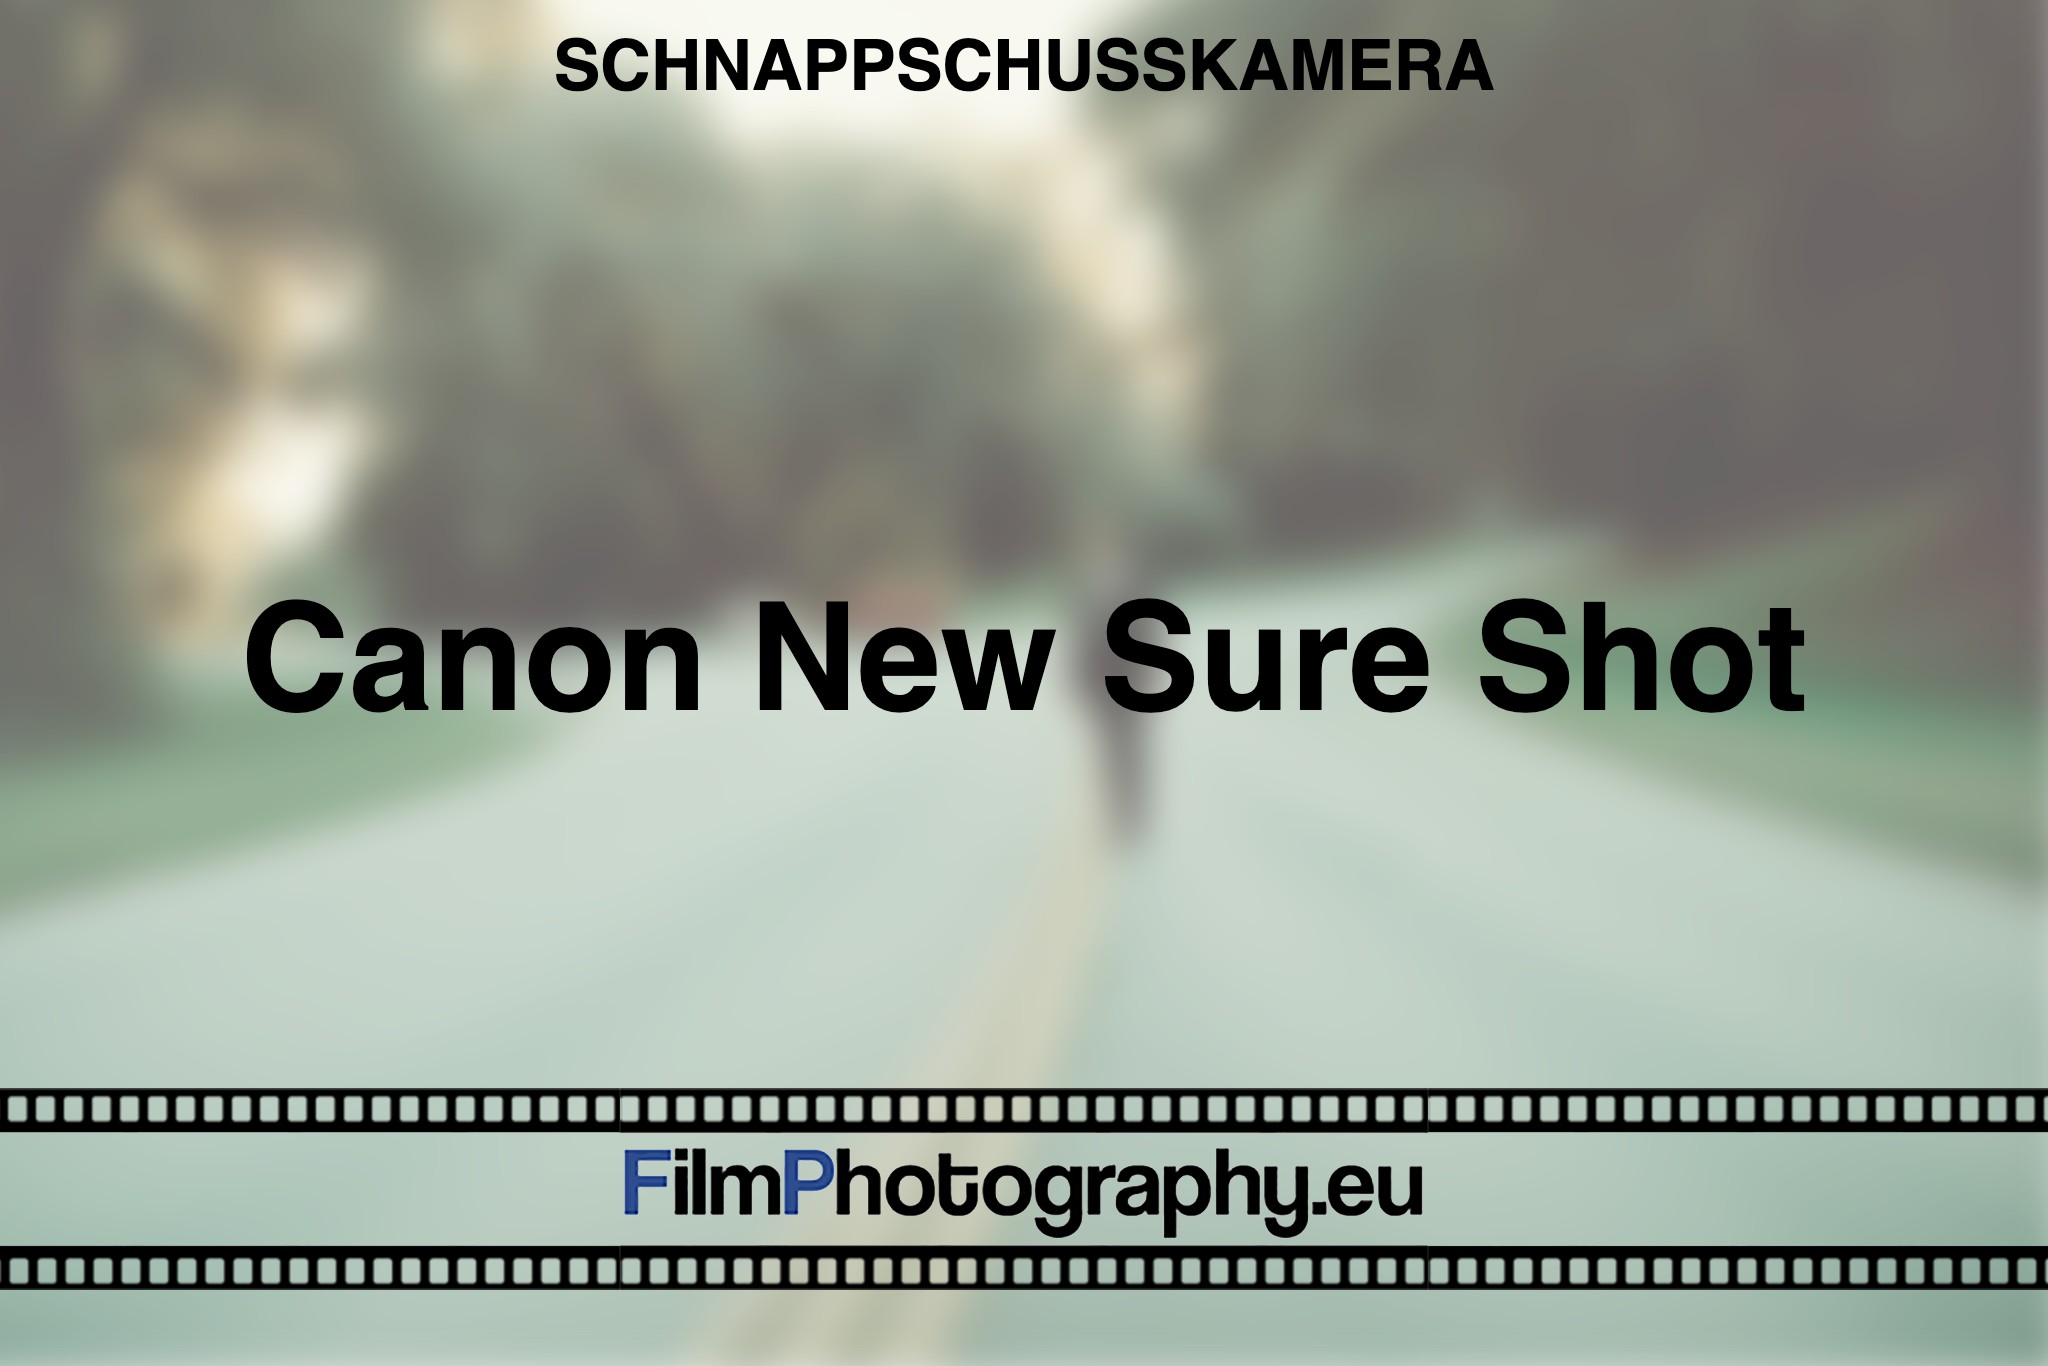 canon-new-sure-shot-schnappschusskamera-bnv